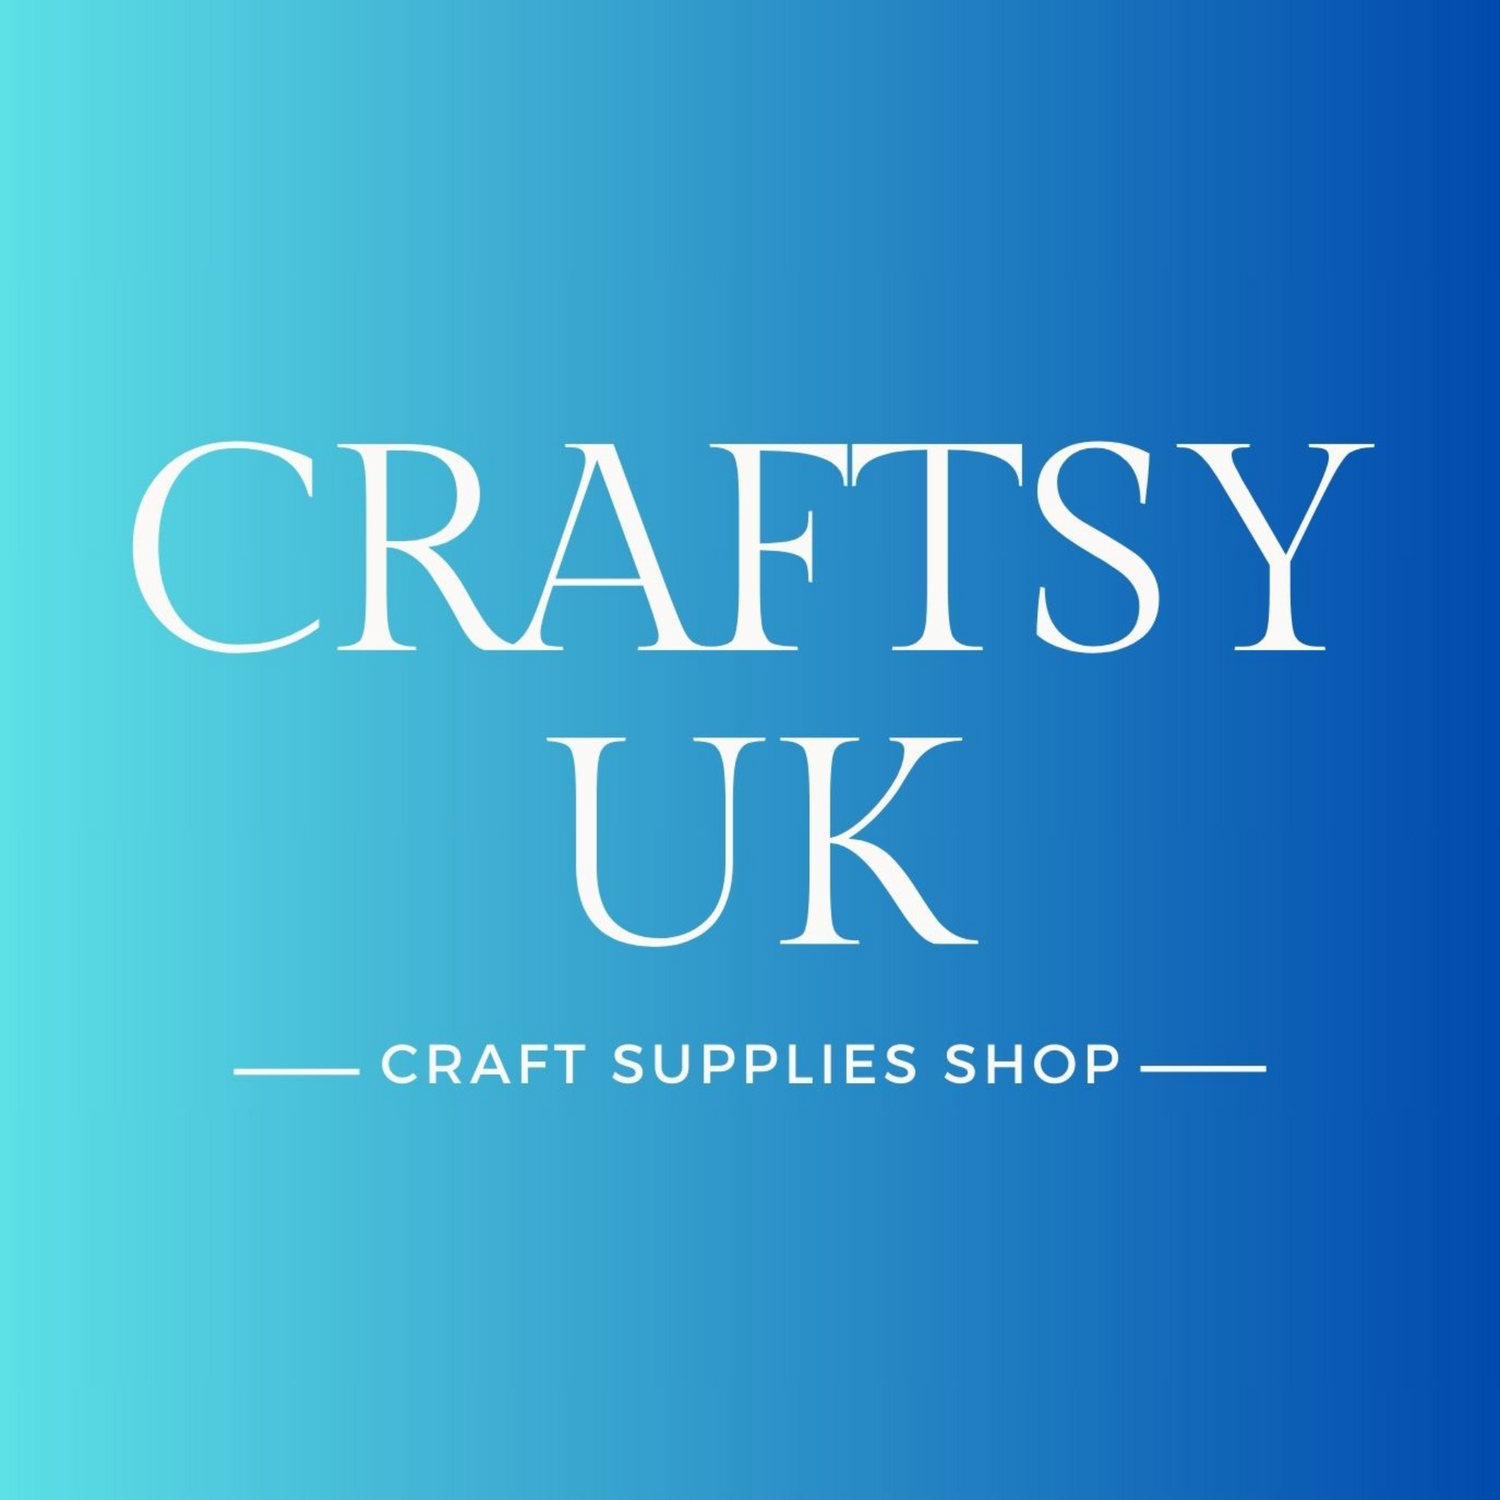 craftsy uk craft supplies shop